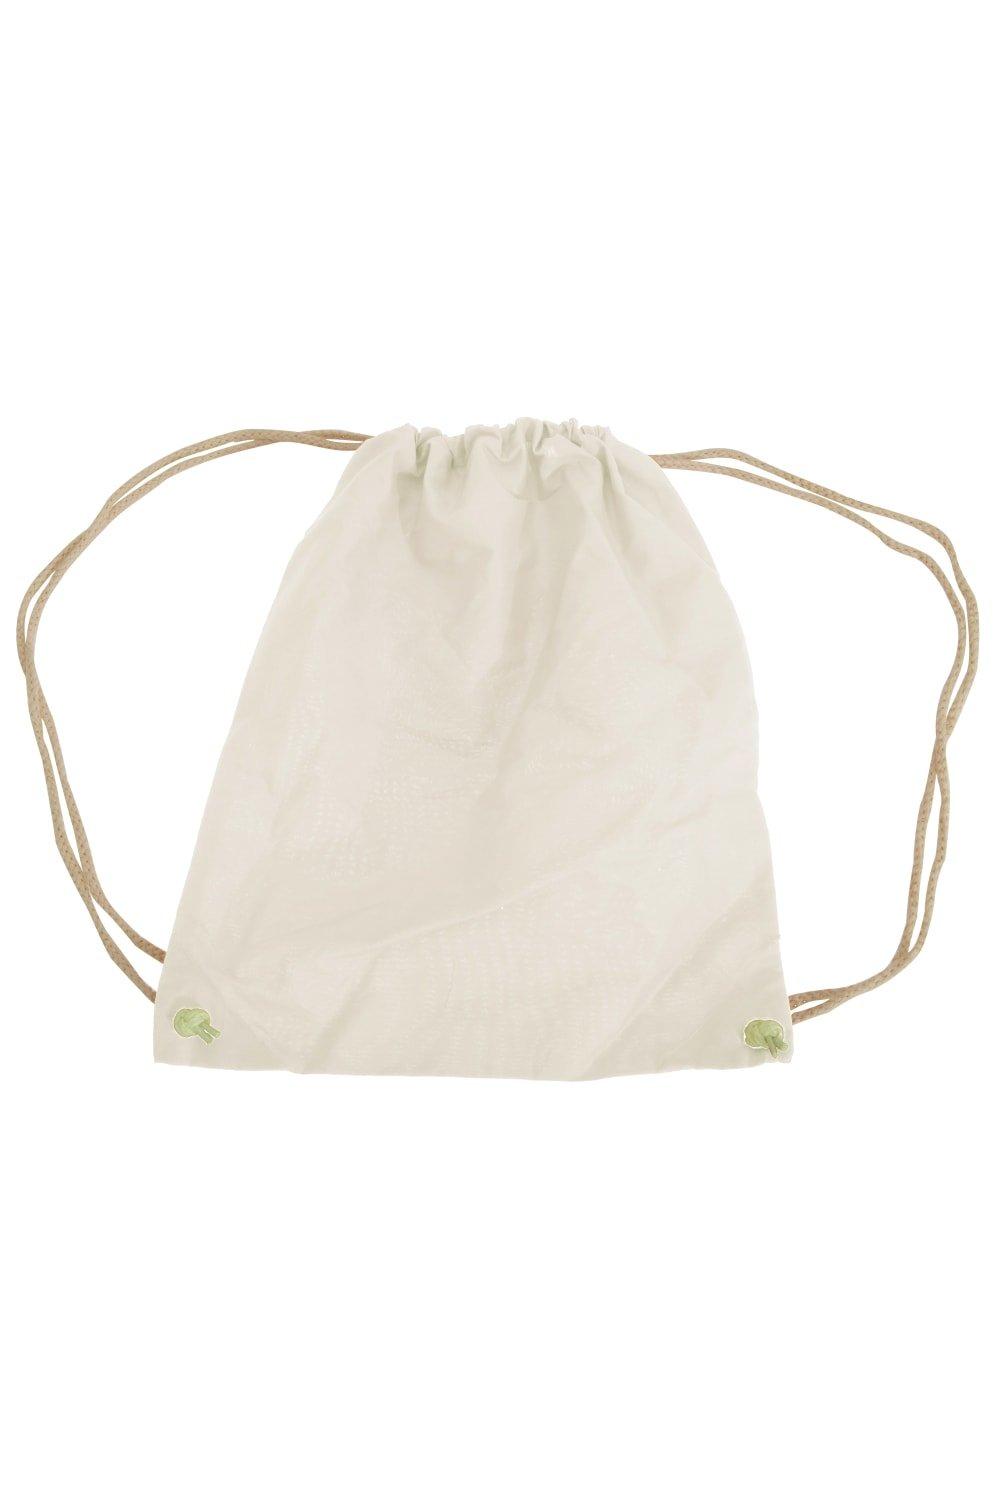 Westford Mill Cotton Gymsac Bag - 12 Litres